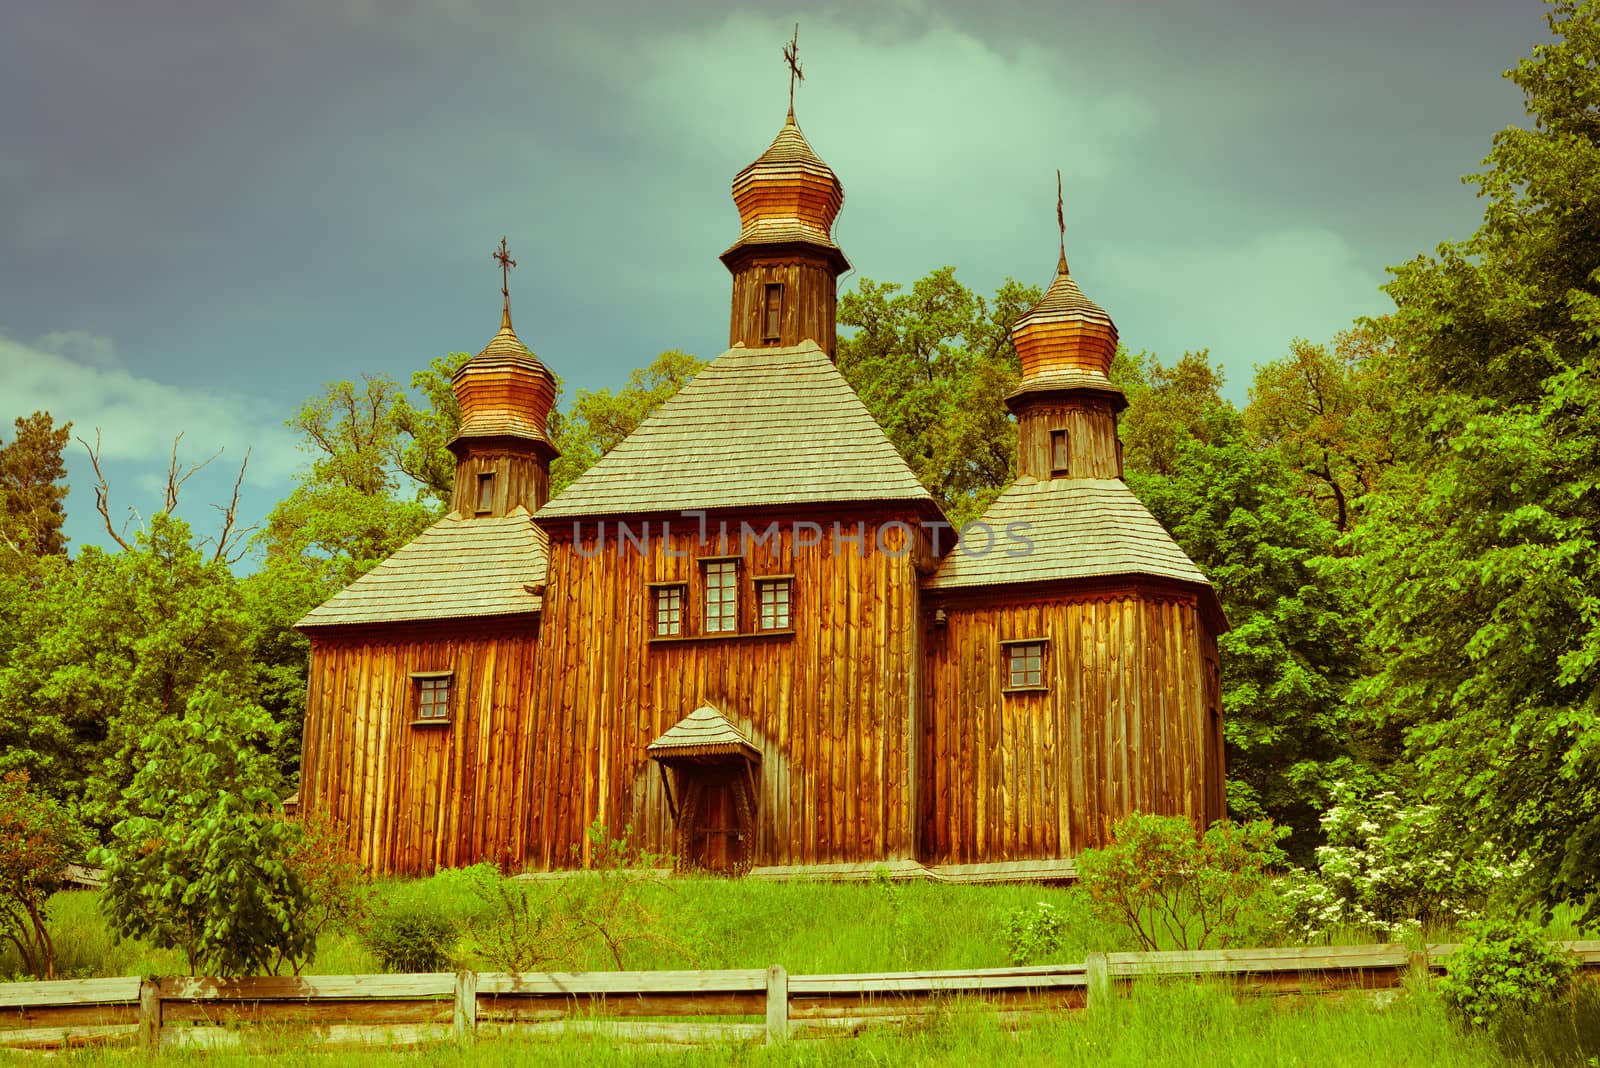 Vintage antique Slavonic wooden church at ethnographic museum Pirogovo, Kiev, Ukraine